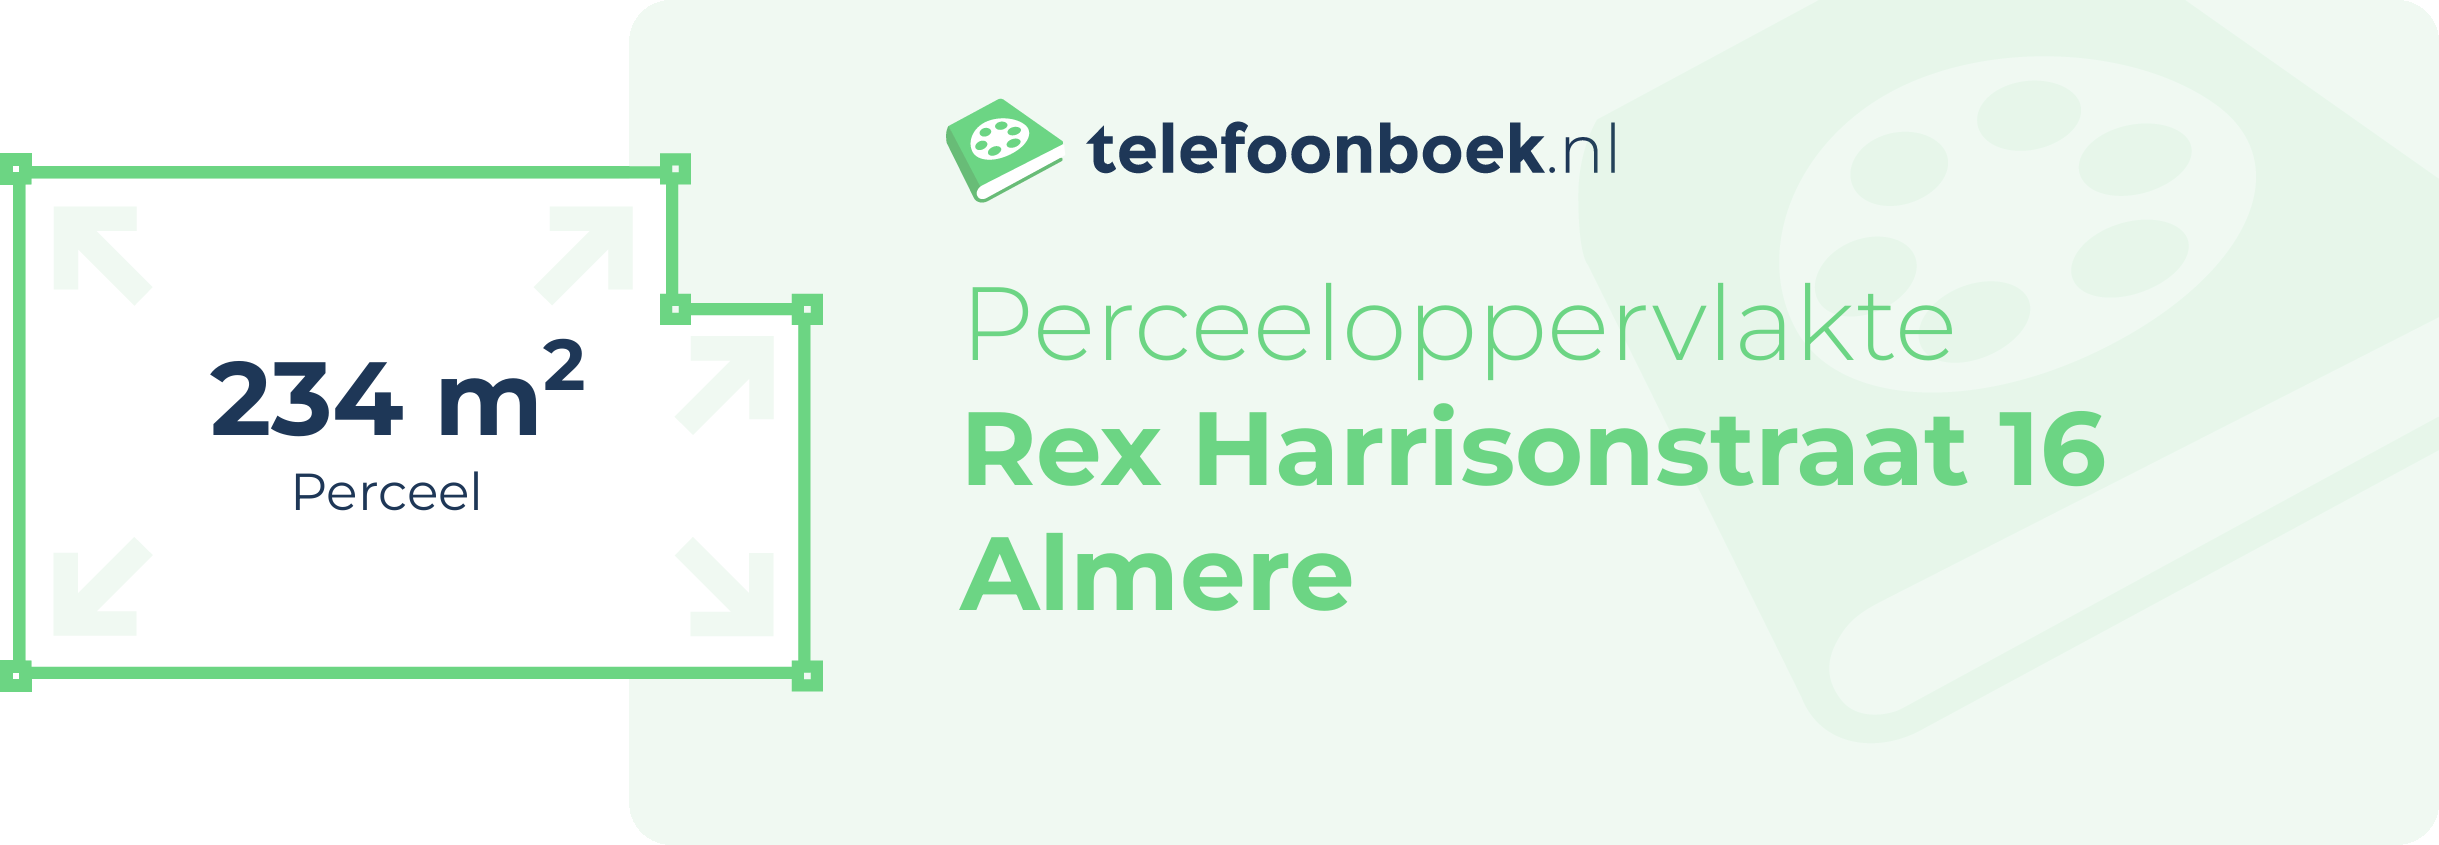 Perceeloppervlakte Rex Harrisonstraat 16 Almere